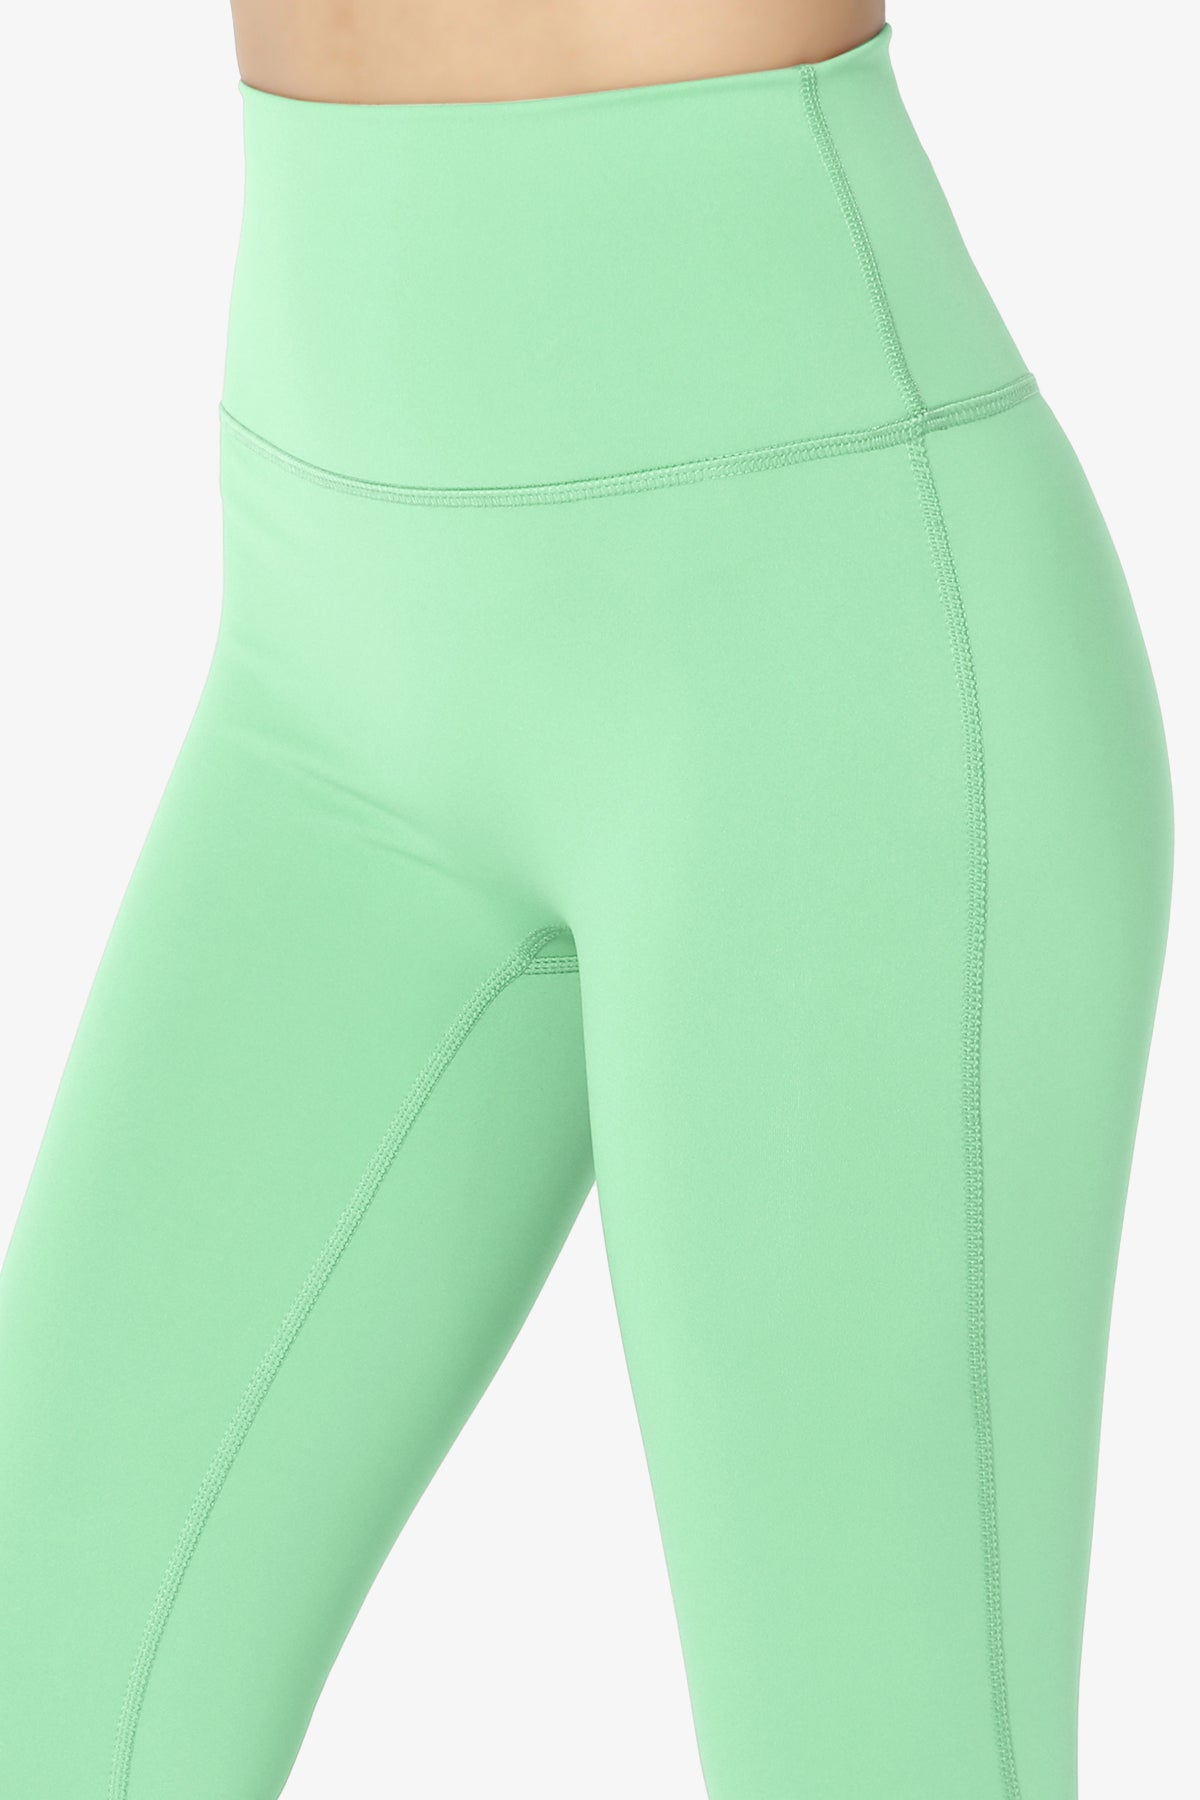 Ethos, Pants & Jumpsuits, Ethos Lime Green High Waist Athletic Yoga  Leggings